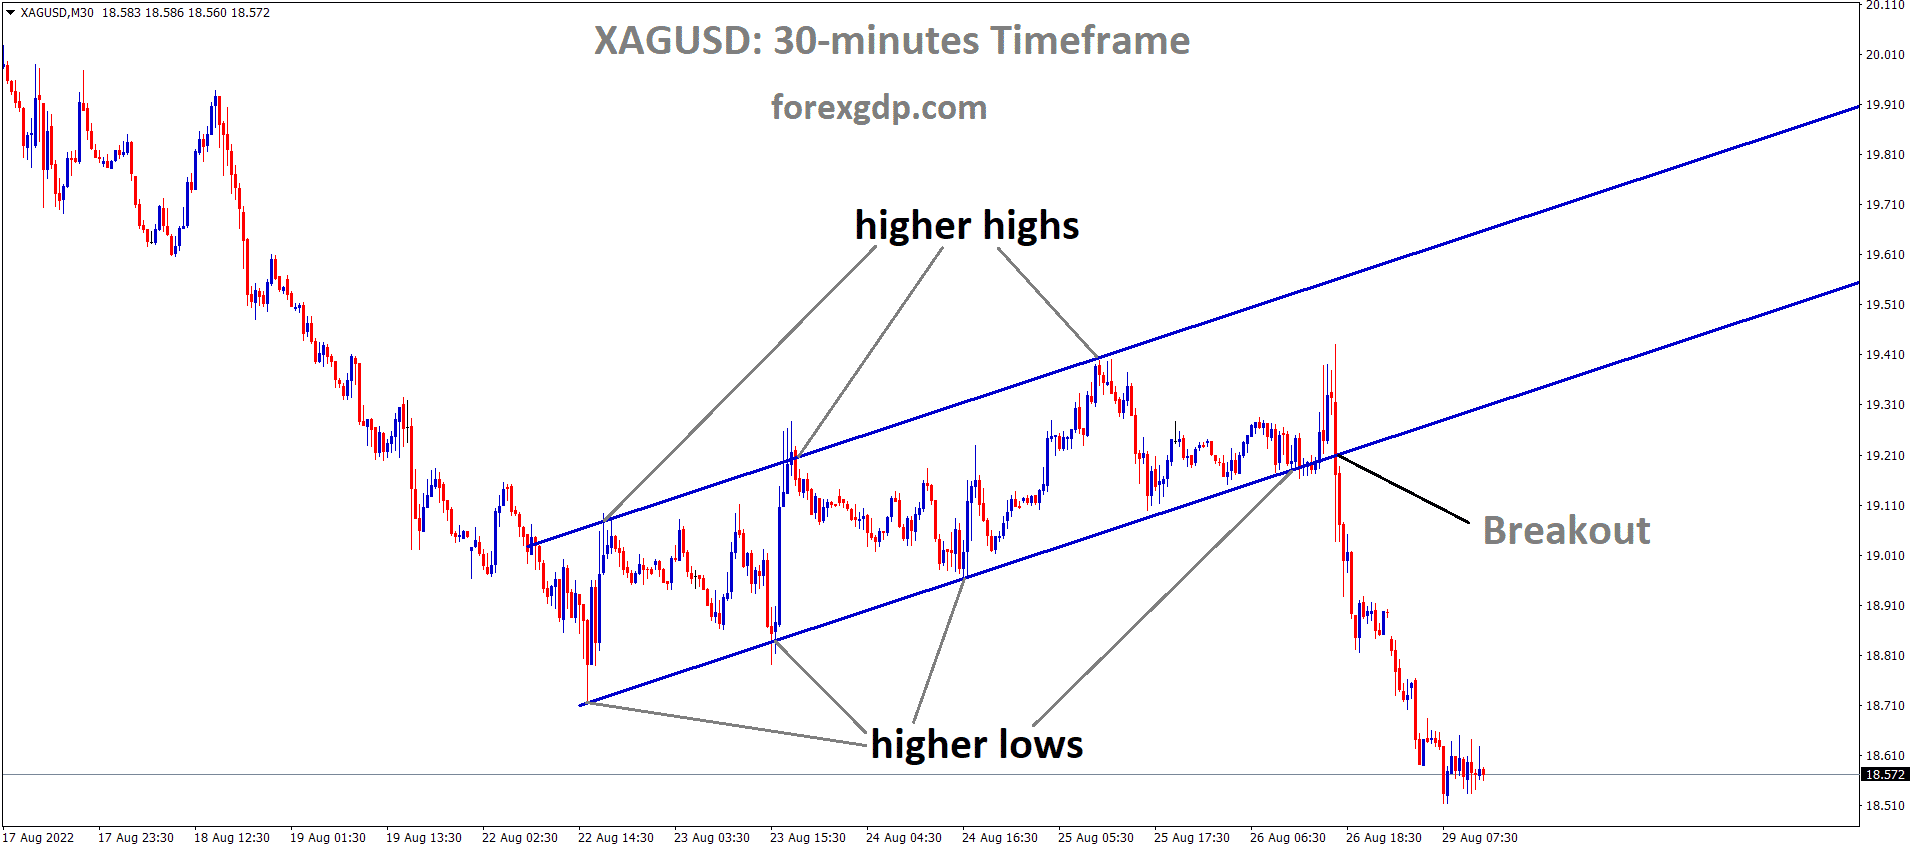 XAGUSD Silver Price has broken the Ascending channel in Downside.